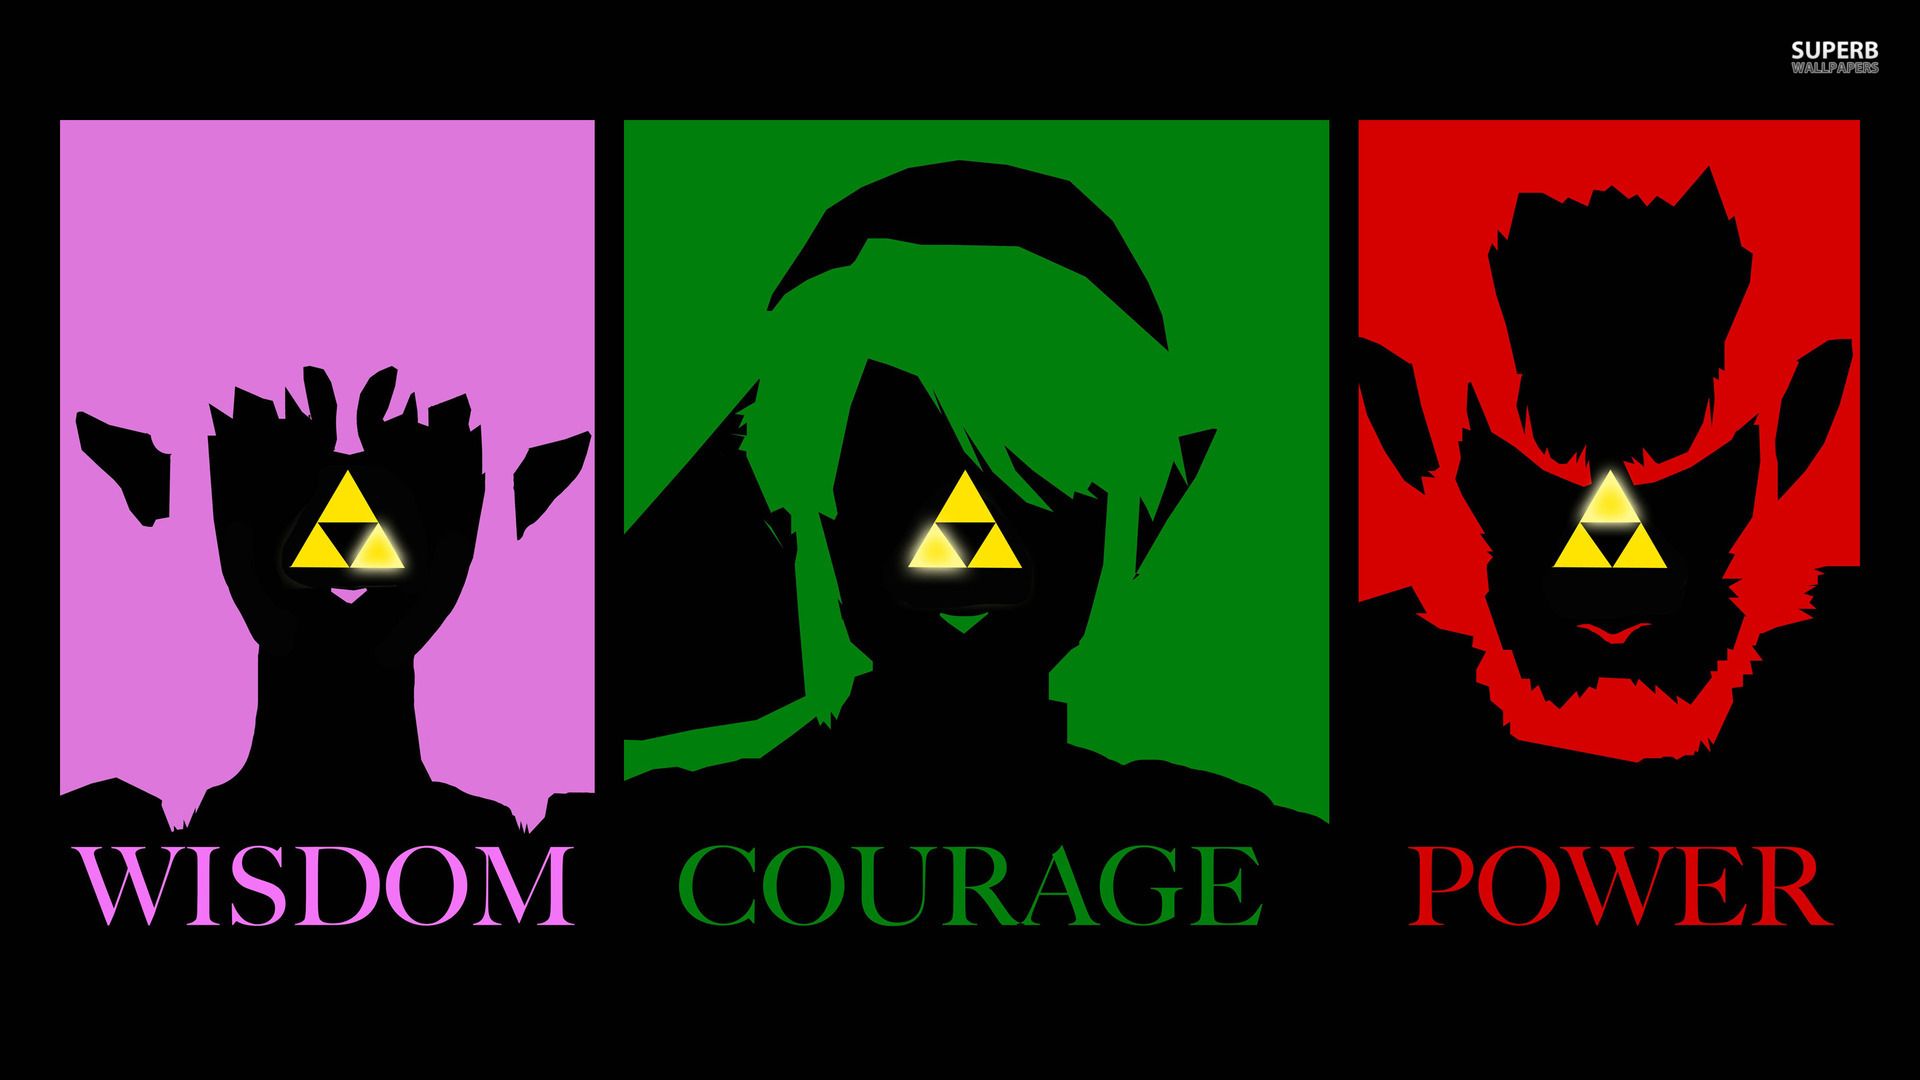 Triforce - The Legend of Zelda wallpaper - Game wallpapers - #23489